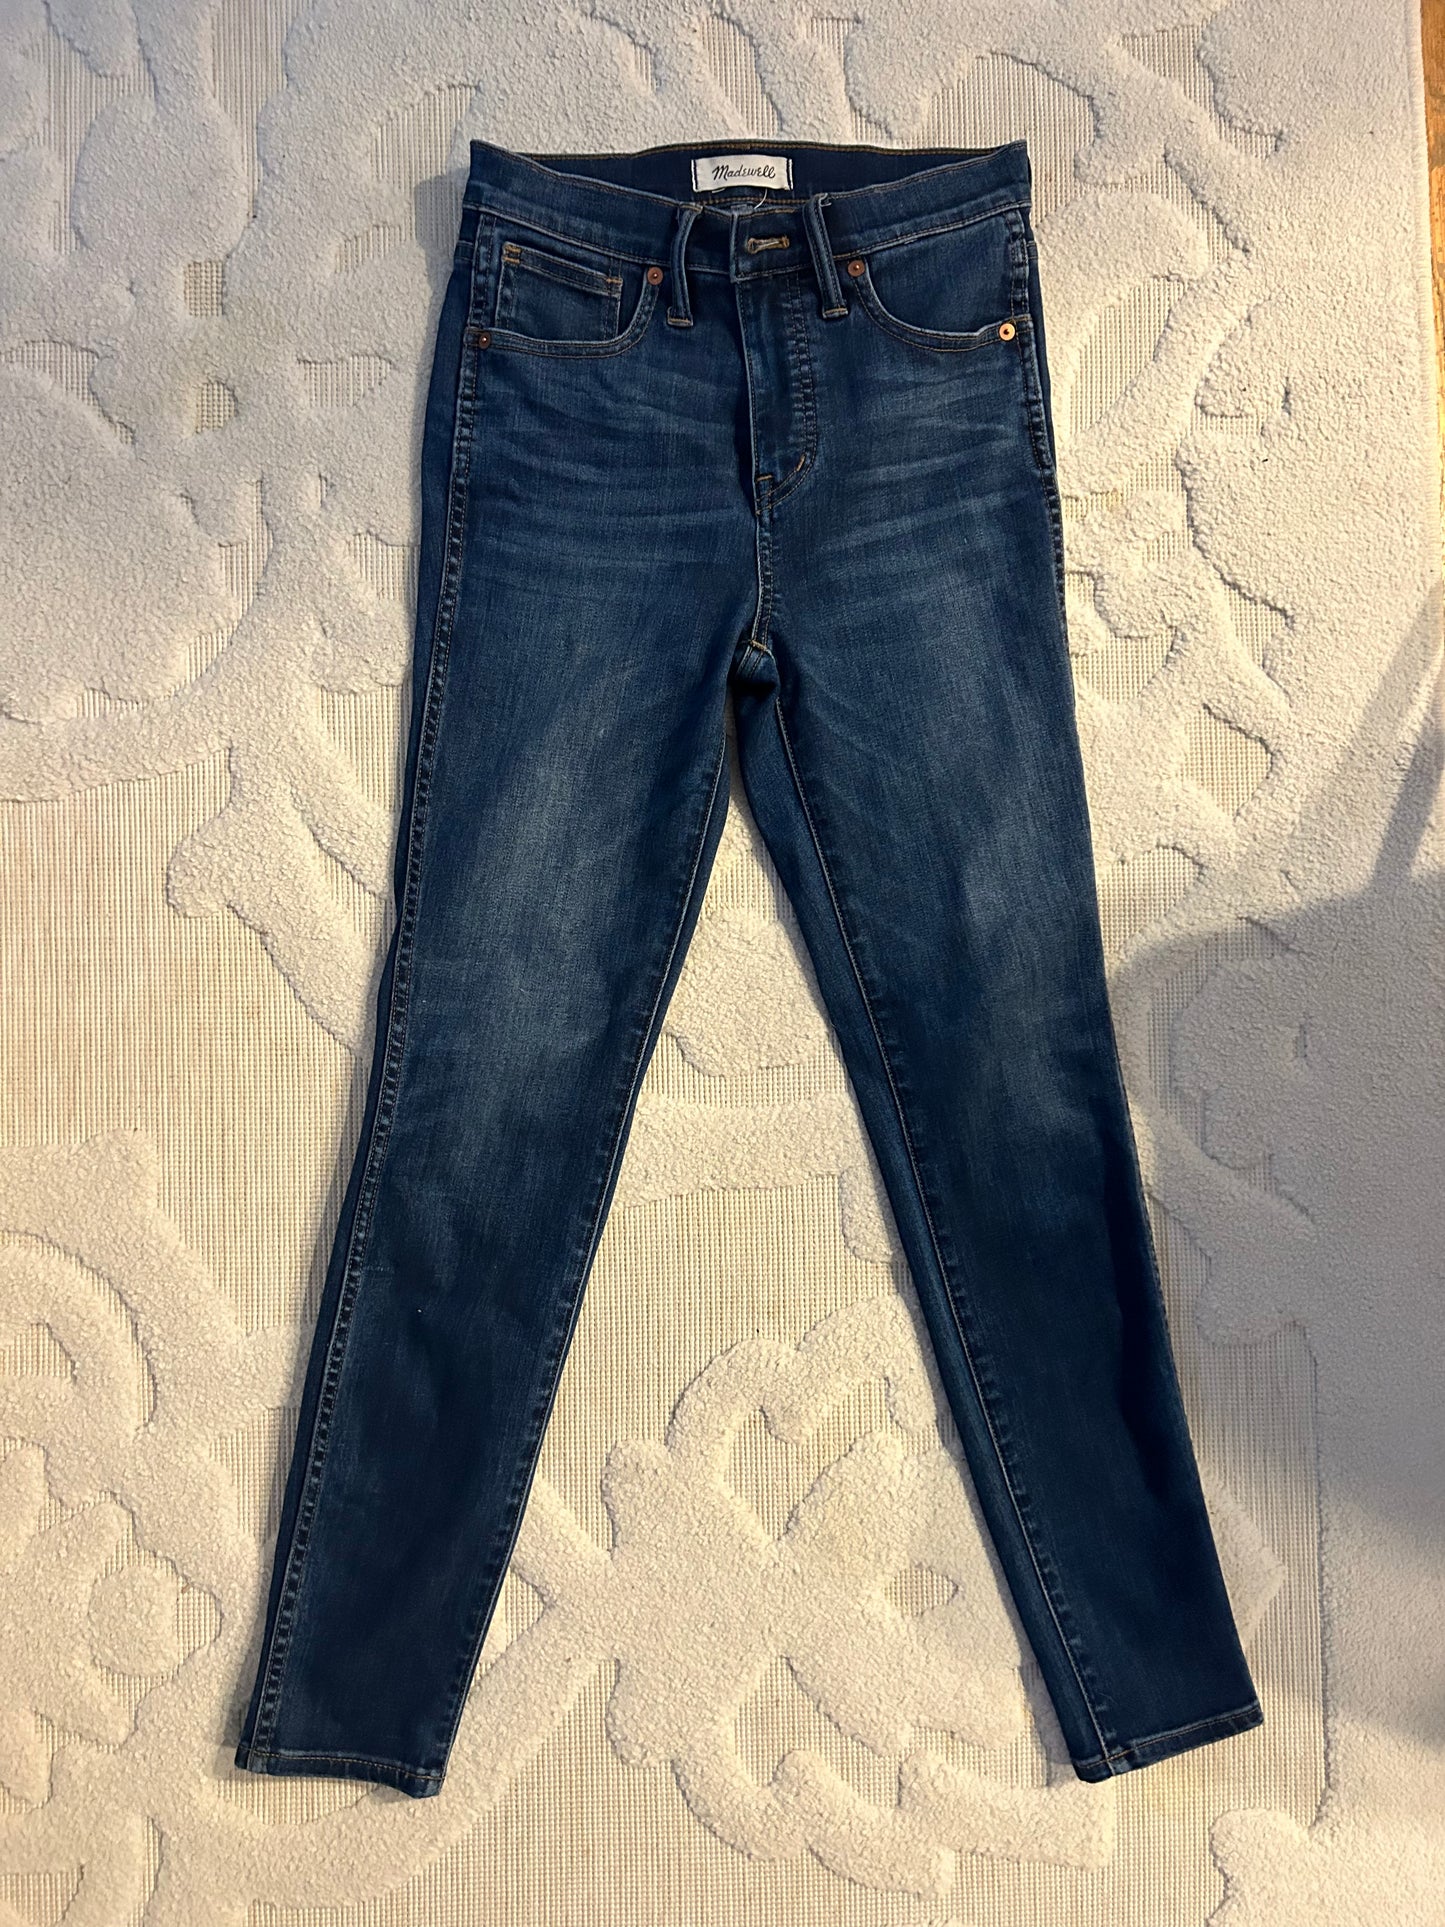 Madewell Skinny Jeans 26